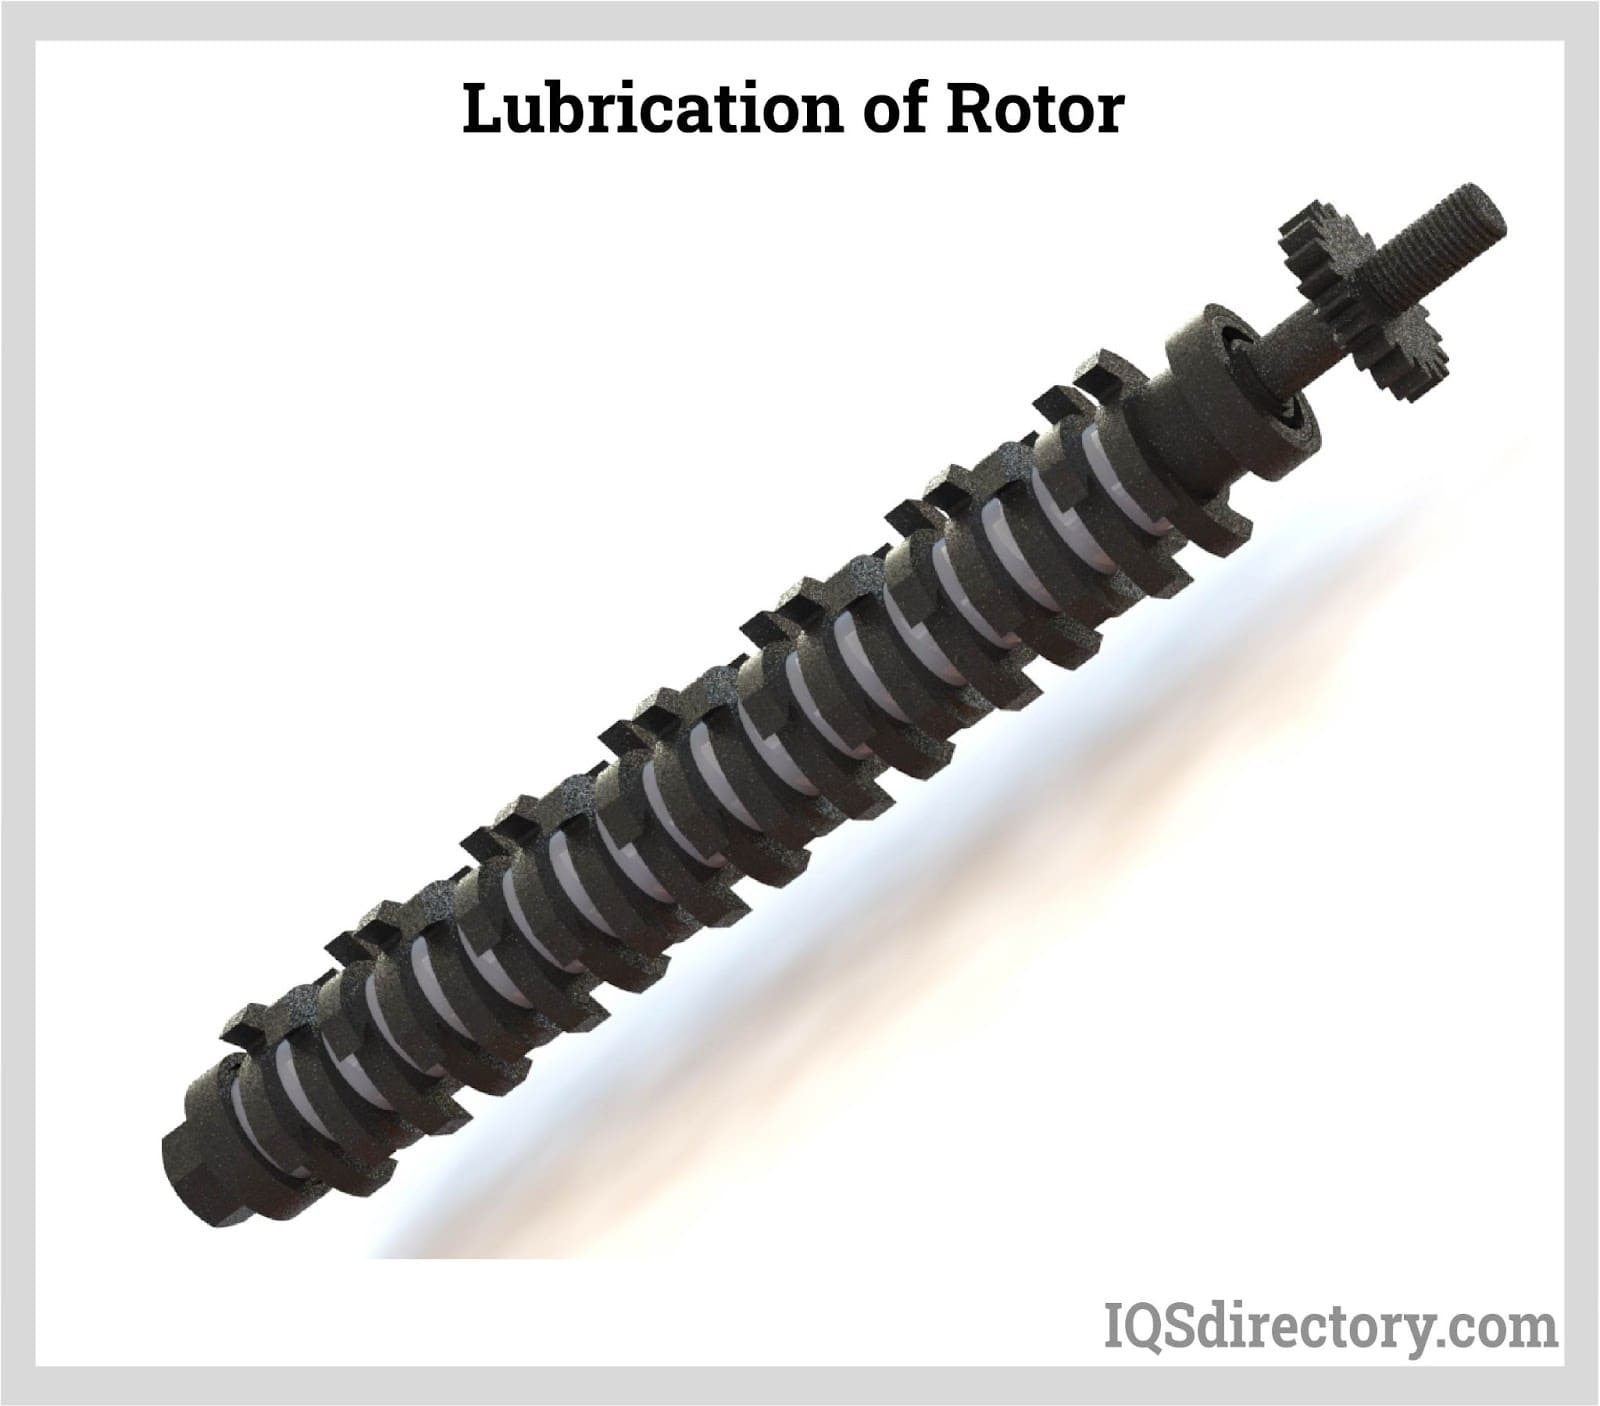 Lubrication of Rotor